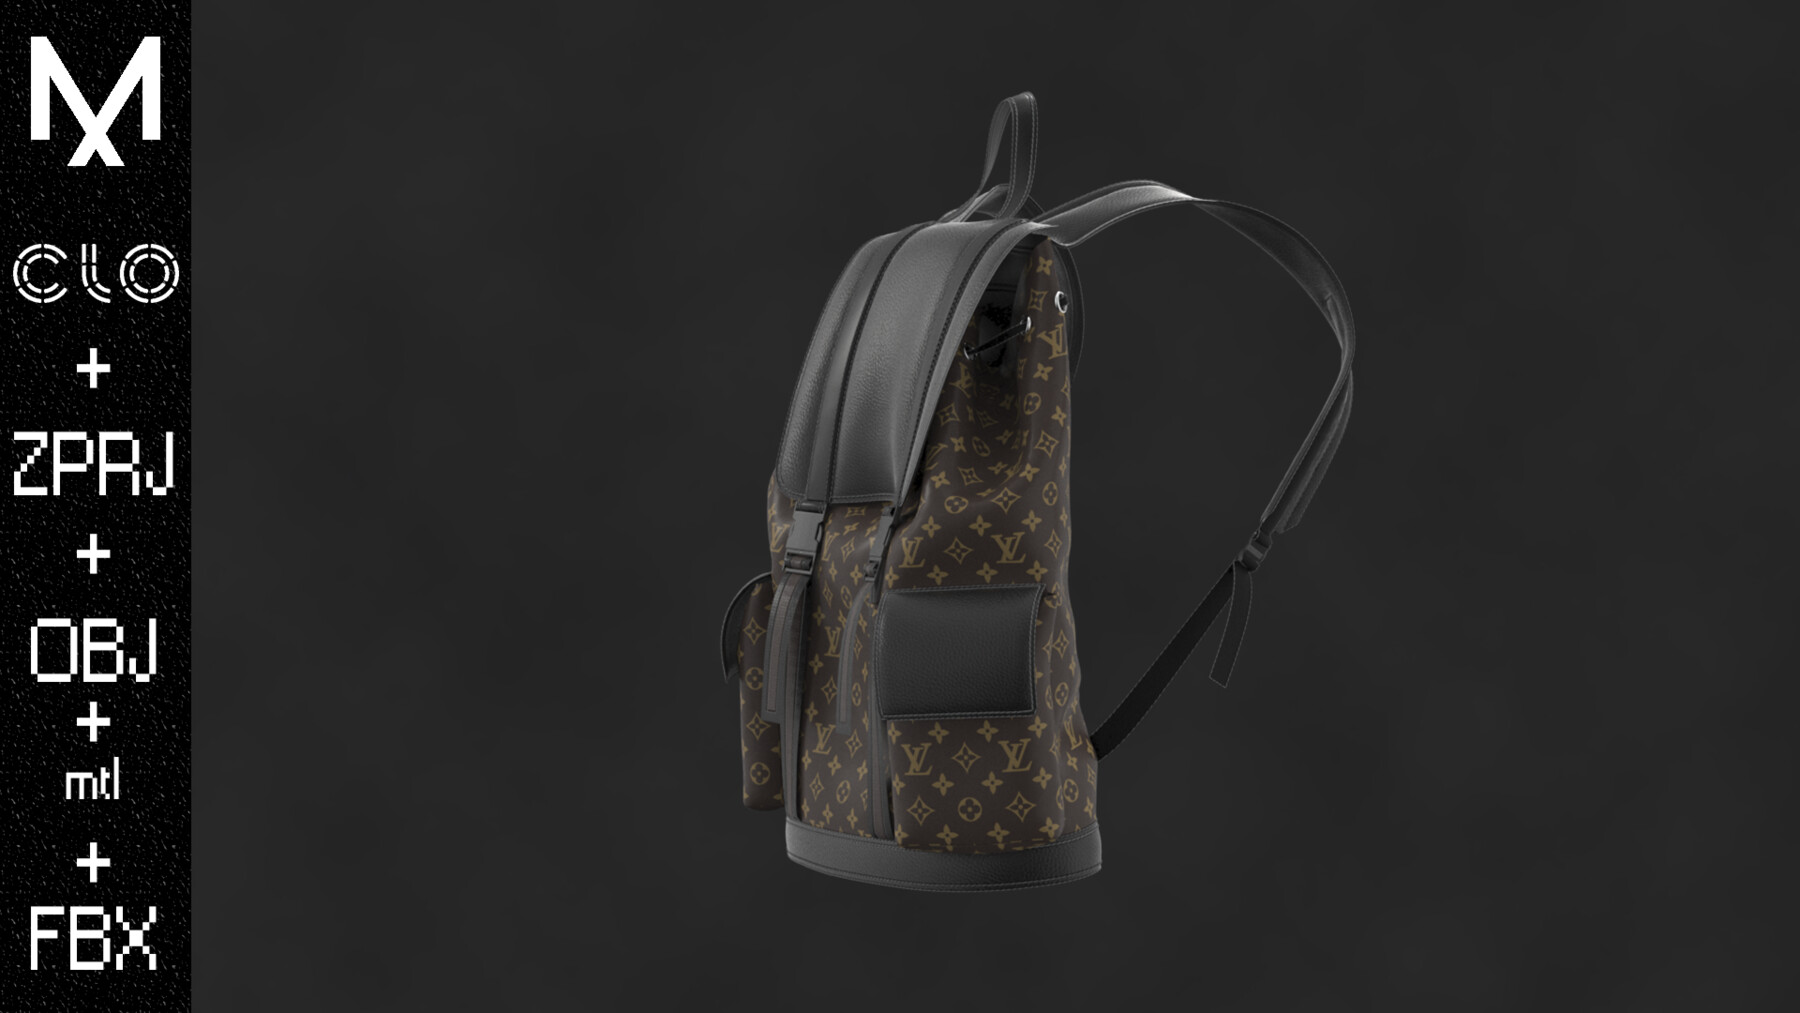 ArtStation - Bag Louis Vuitton LV OBJ mtl FBX ZPRJ